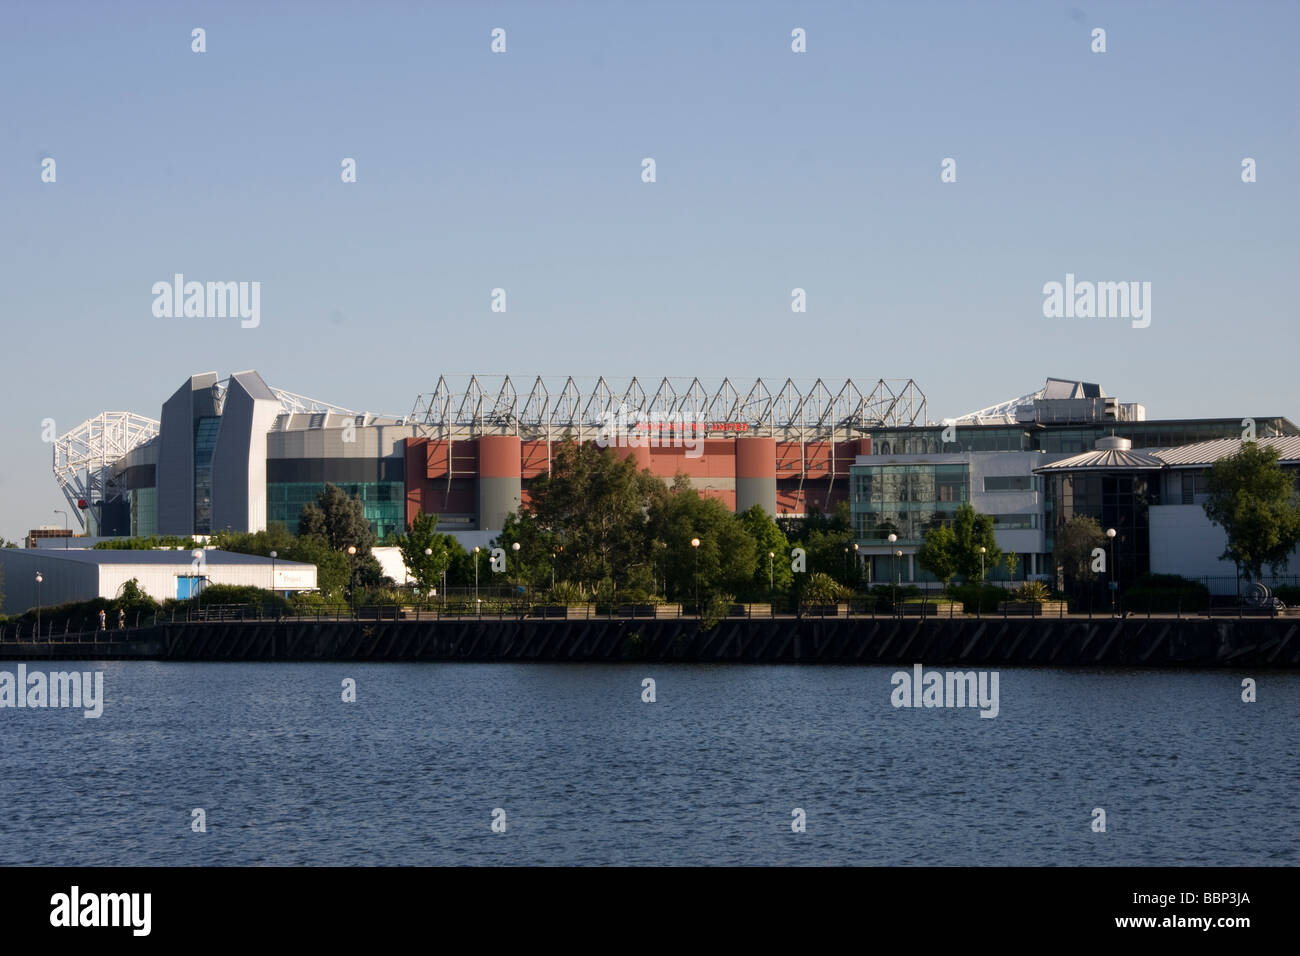 Terrain de football Manchester United Banque D'Images